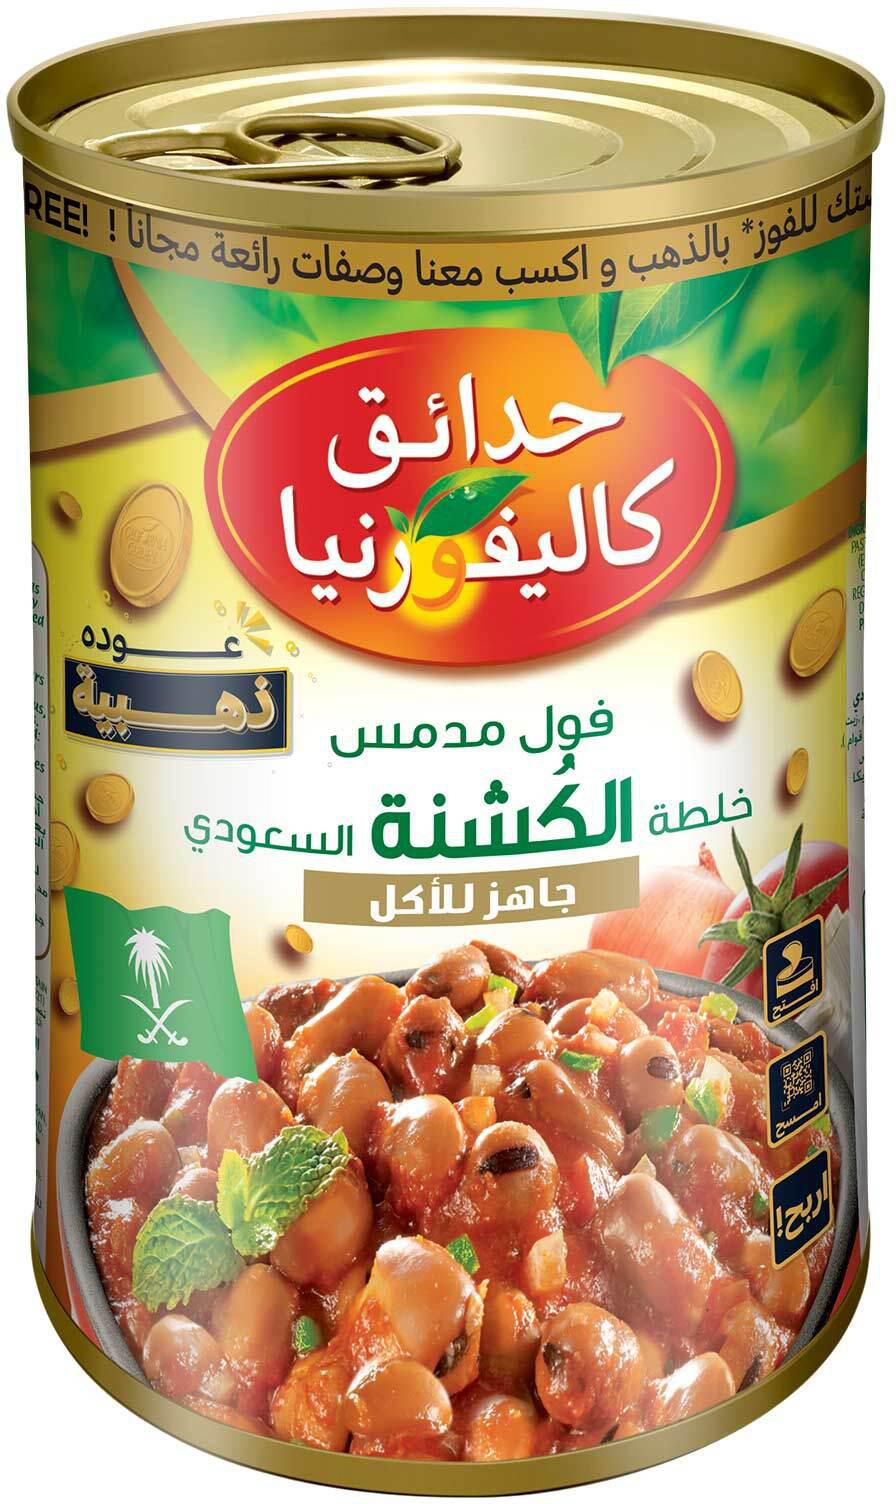 California garden fava beans saudi koshna recipe 450 g